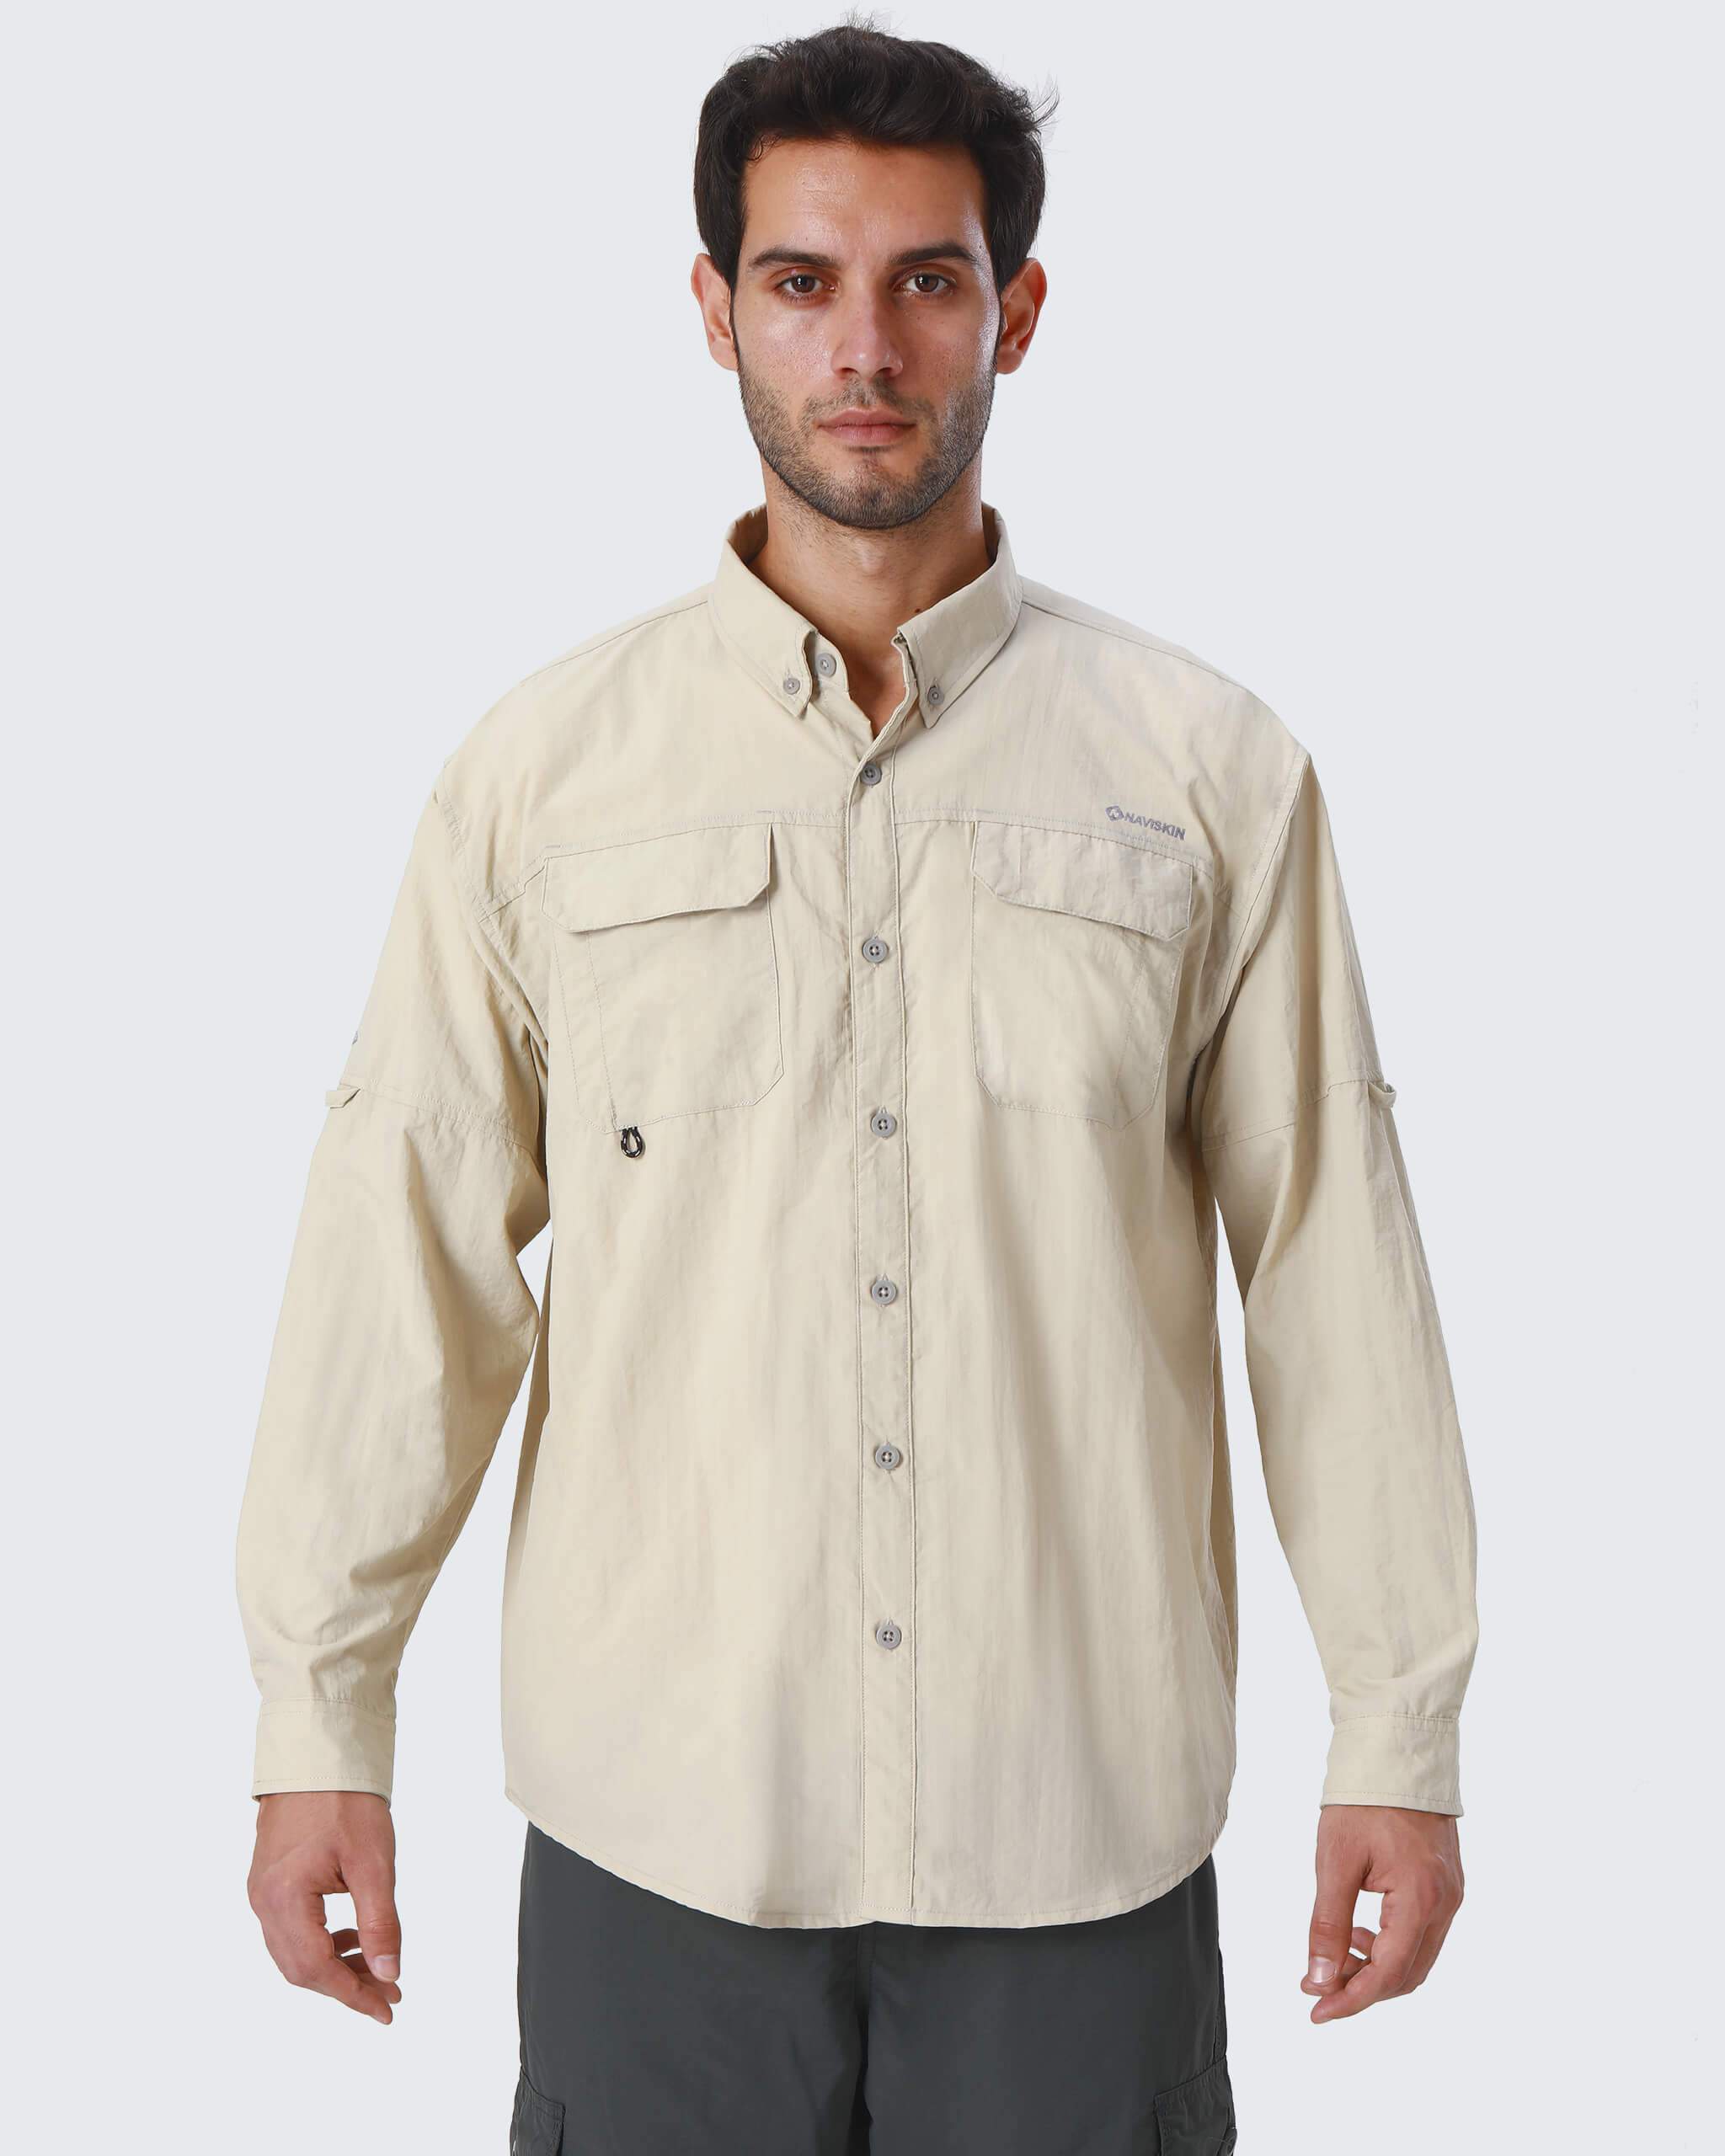 NAVISKIN Men's UPF 50+ Sun Protection Clothing Hiking Fishing Shirt Lightweight Quick Dry SPF Outdoor Long Sleeve Shirt, Khaki / Small